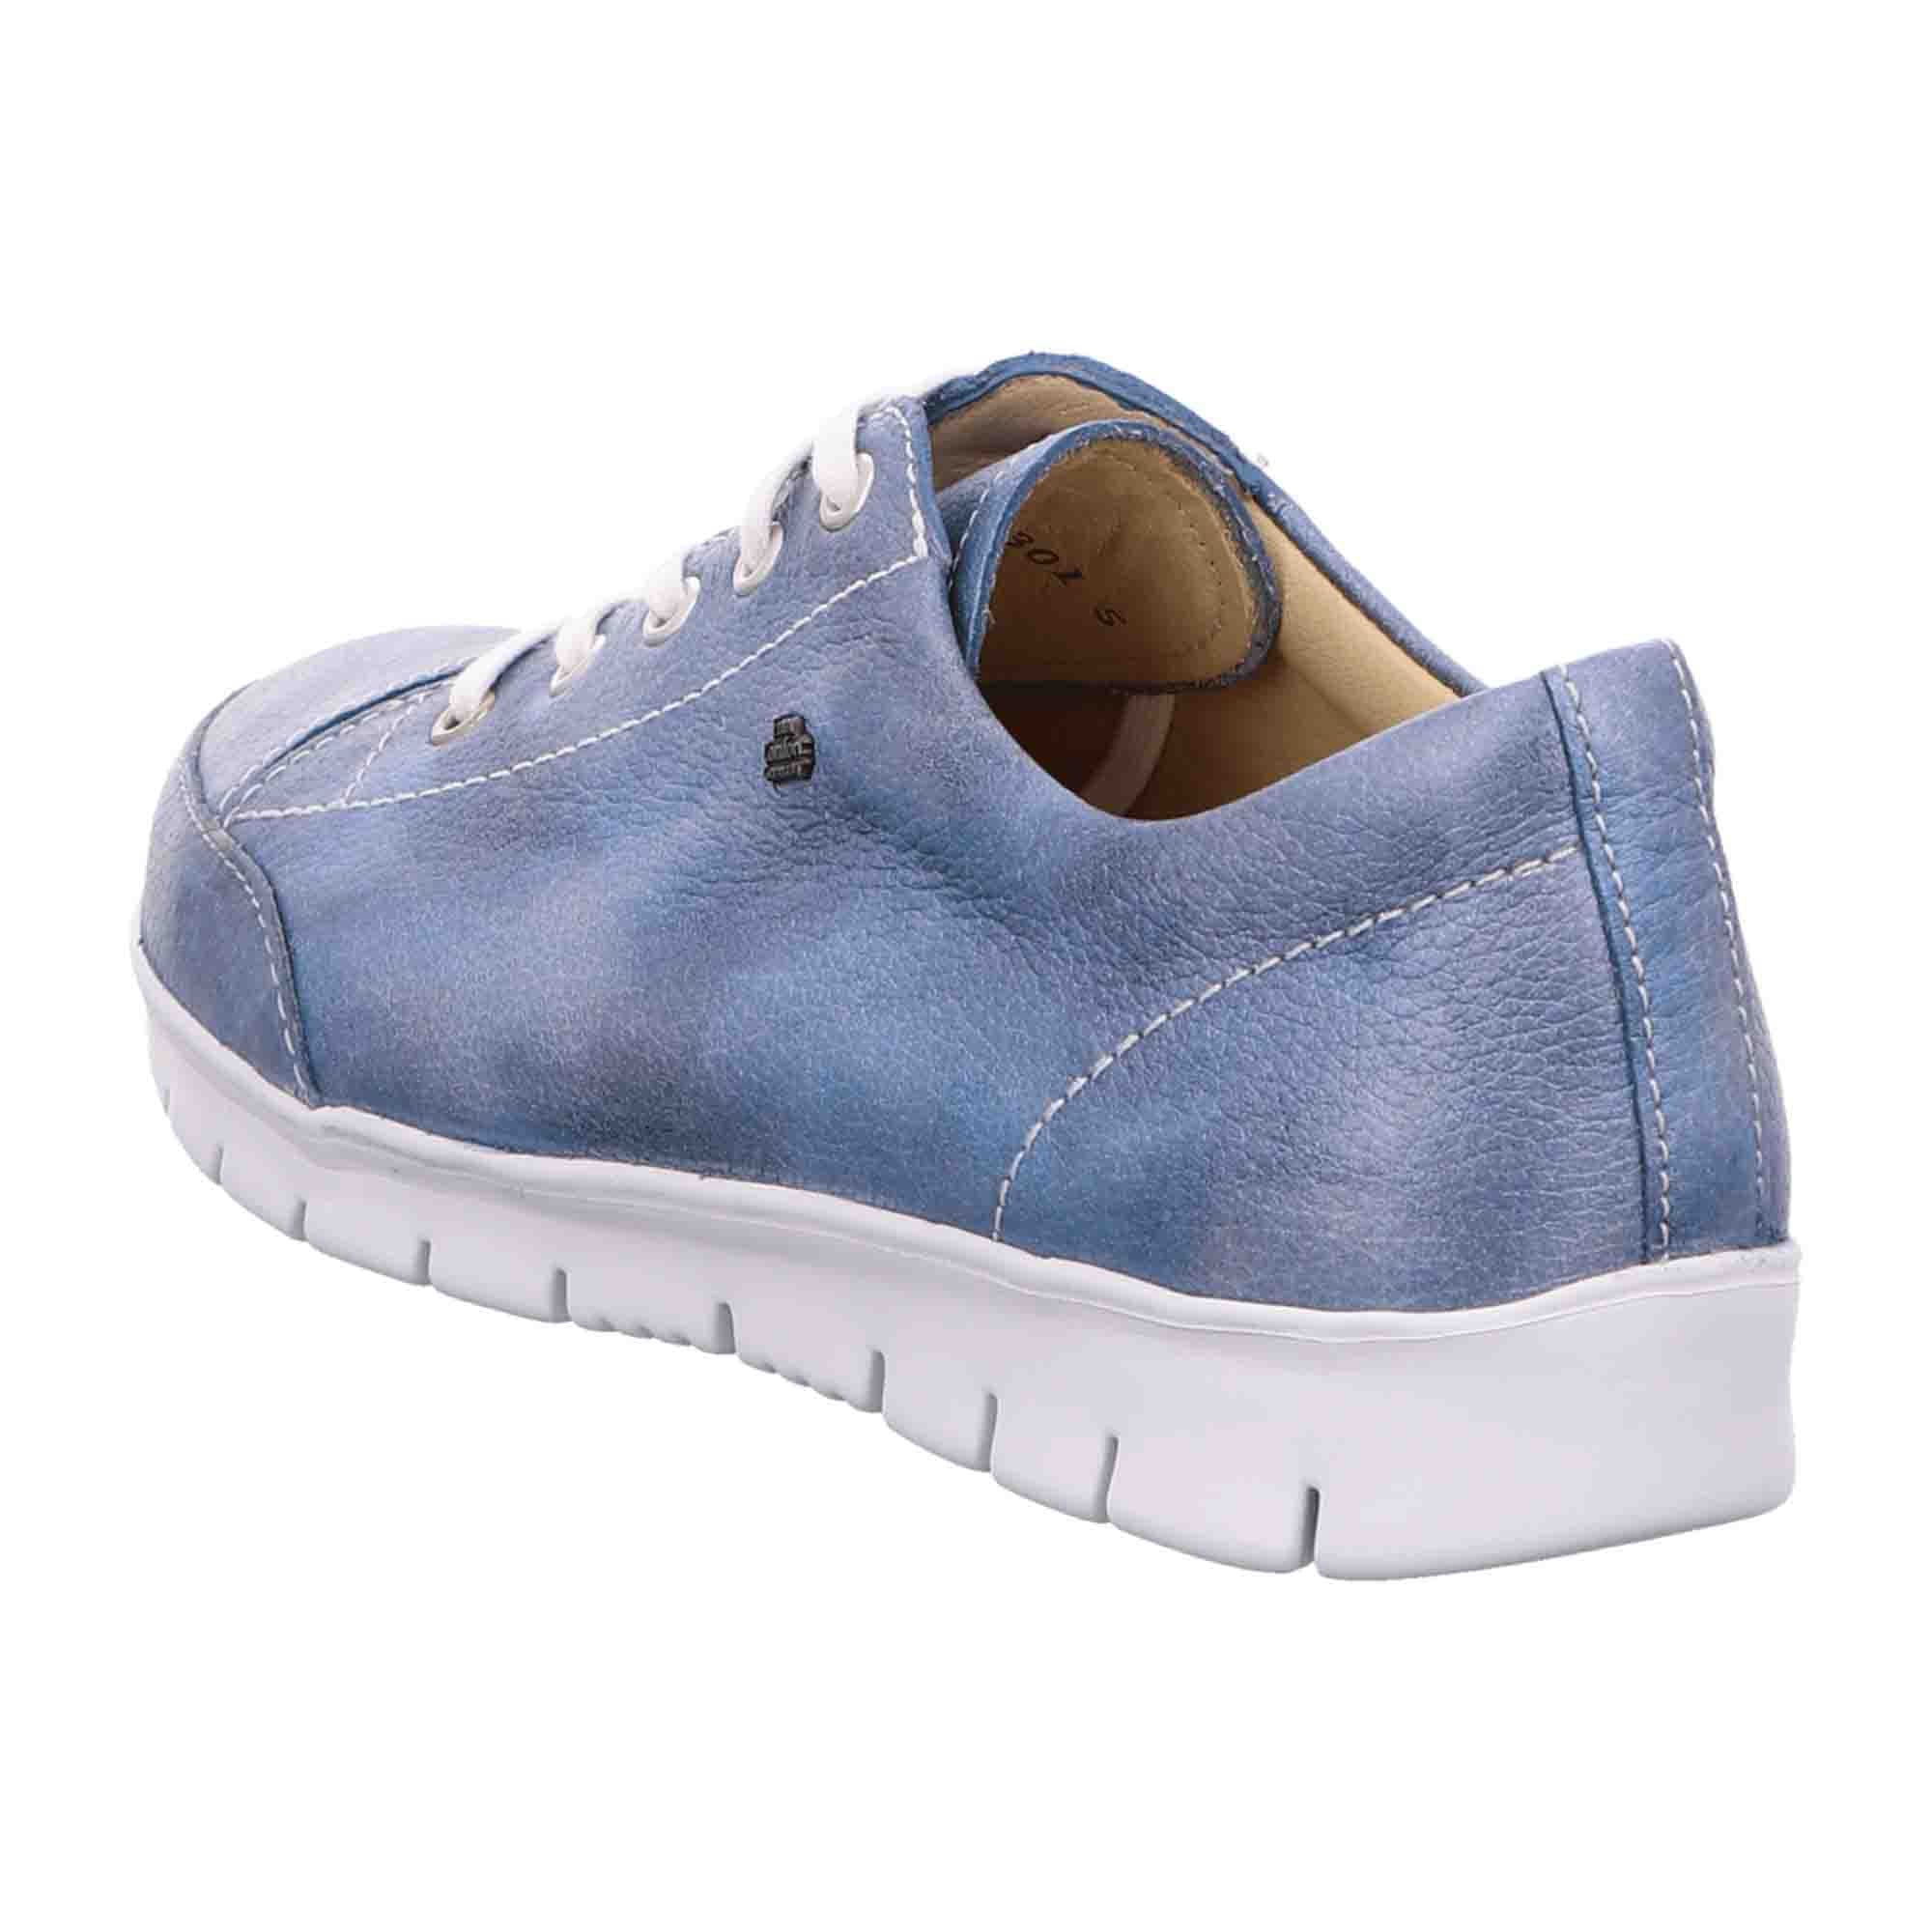 Finn Comfort Swansea Women's Blue Jeans-Inspired Comfort Shoes